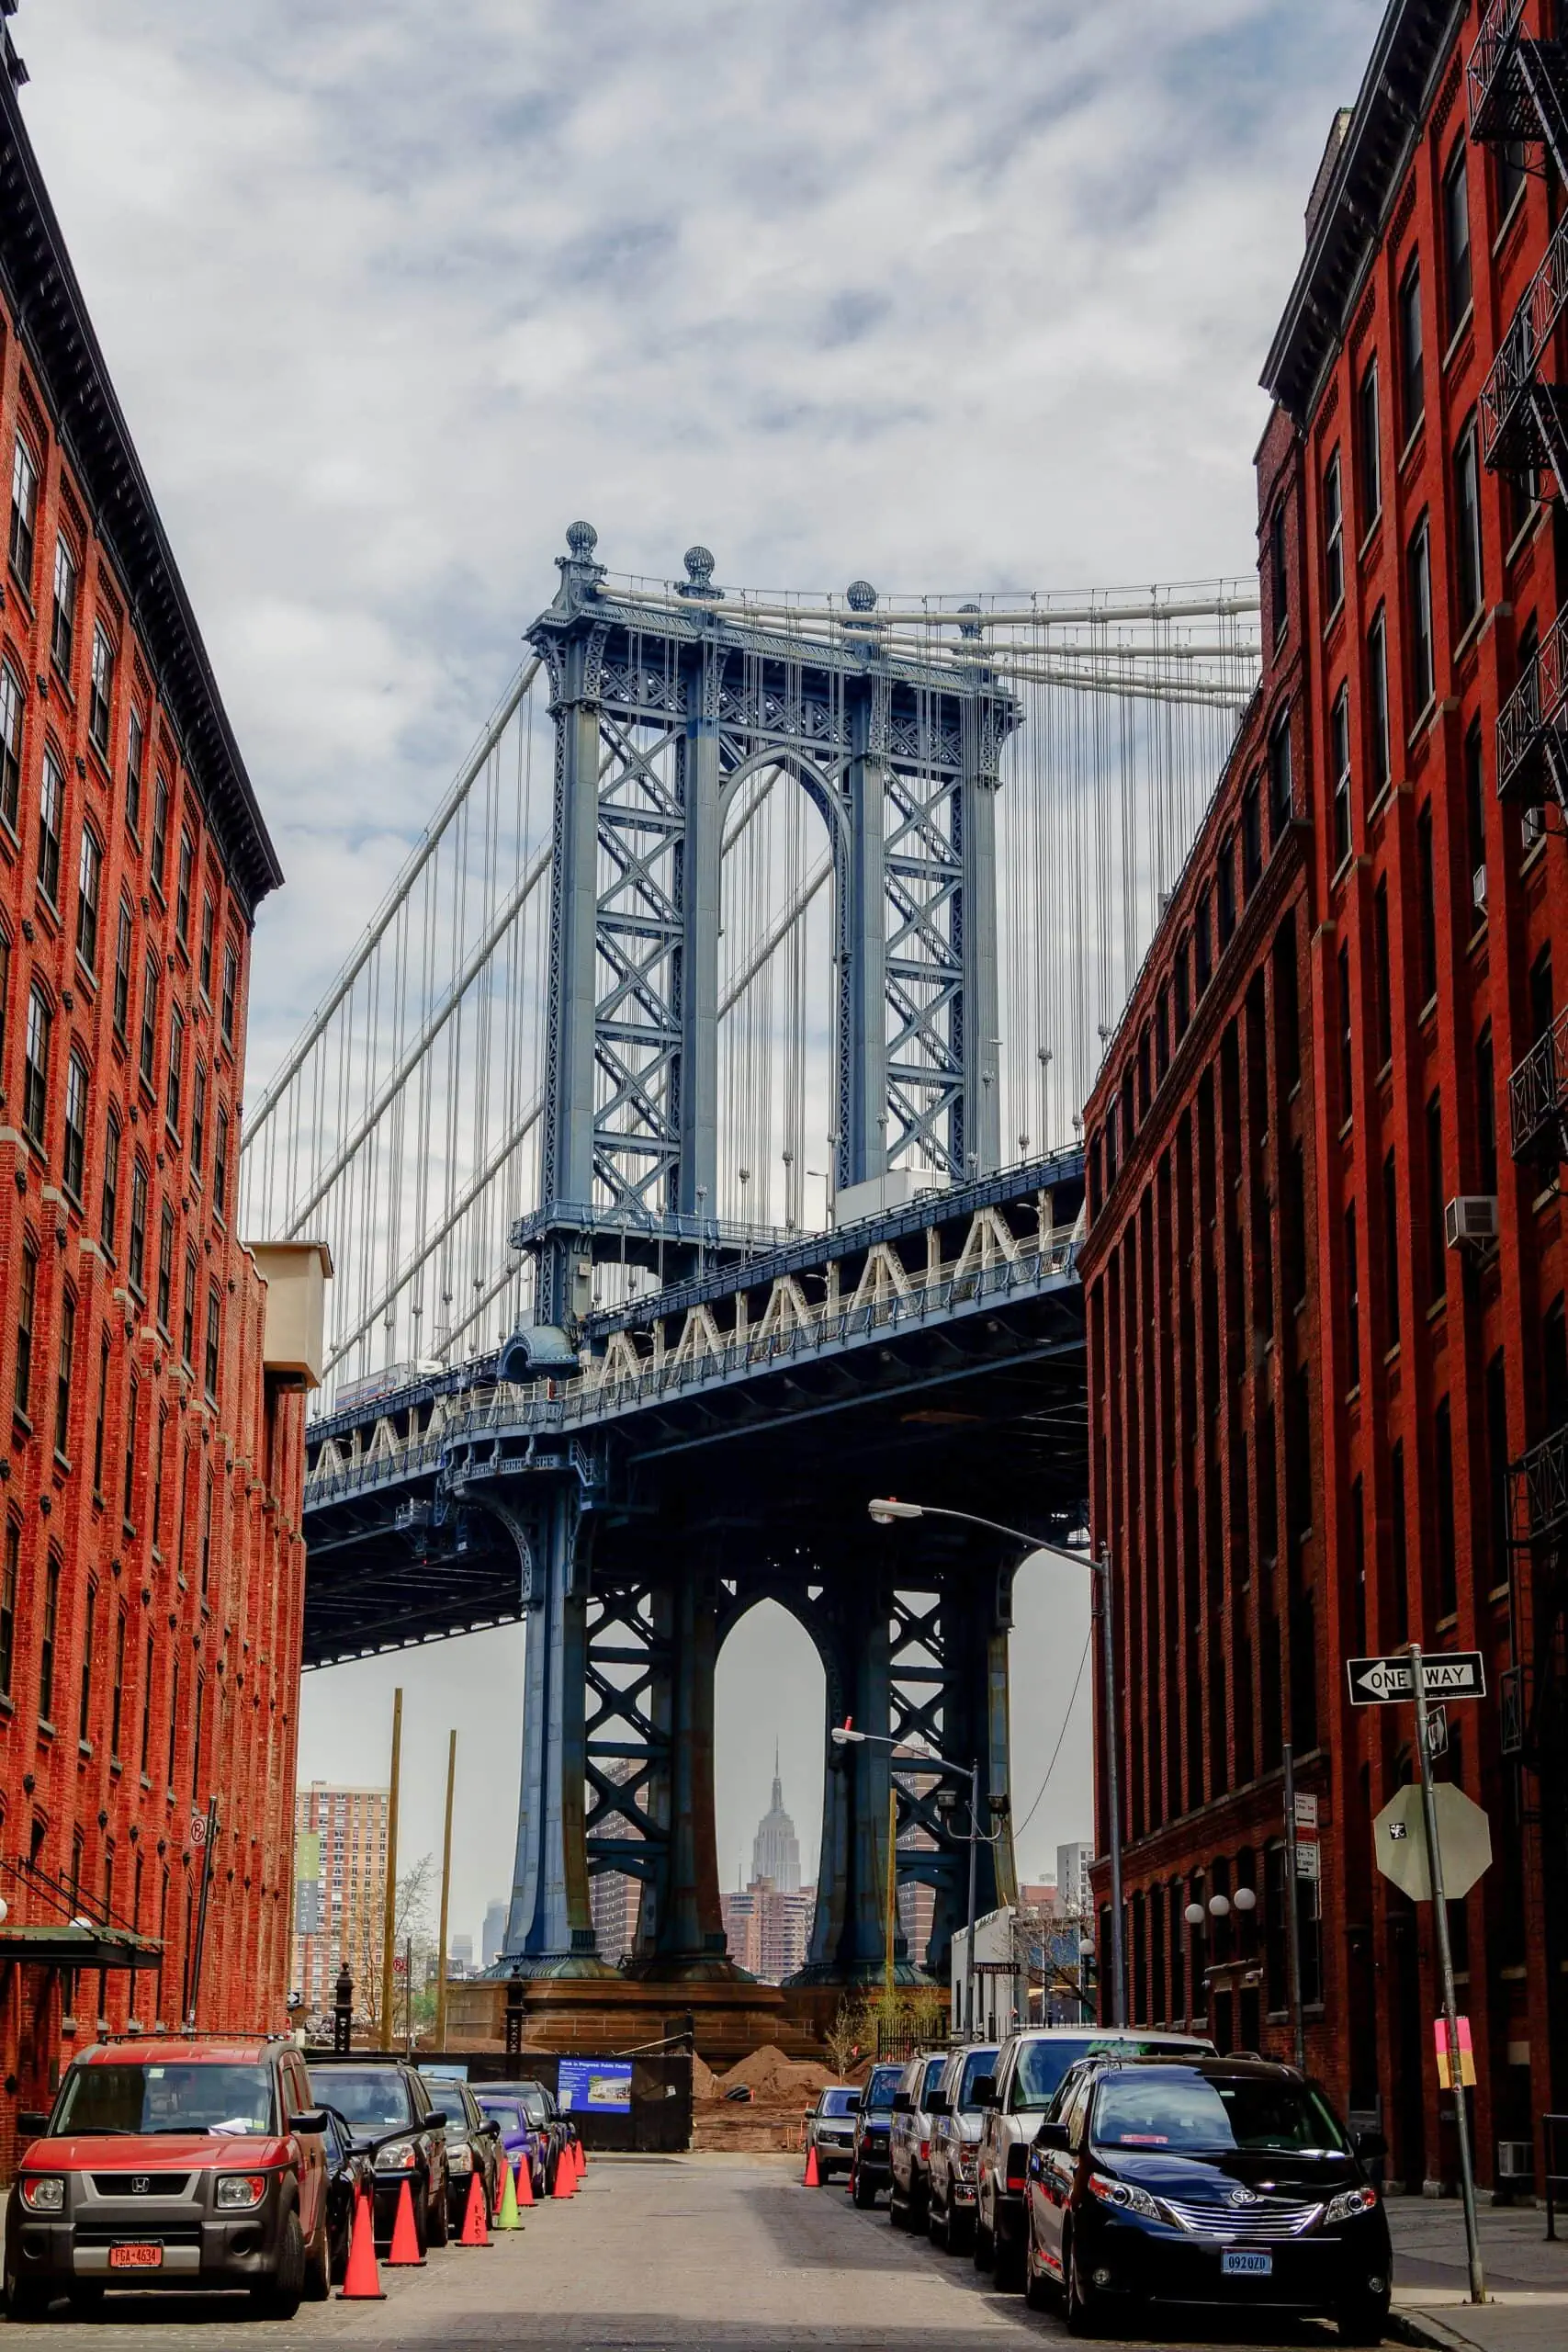 NYC bridge monitored by street surveillance cameras